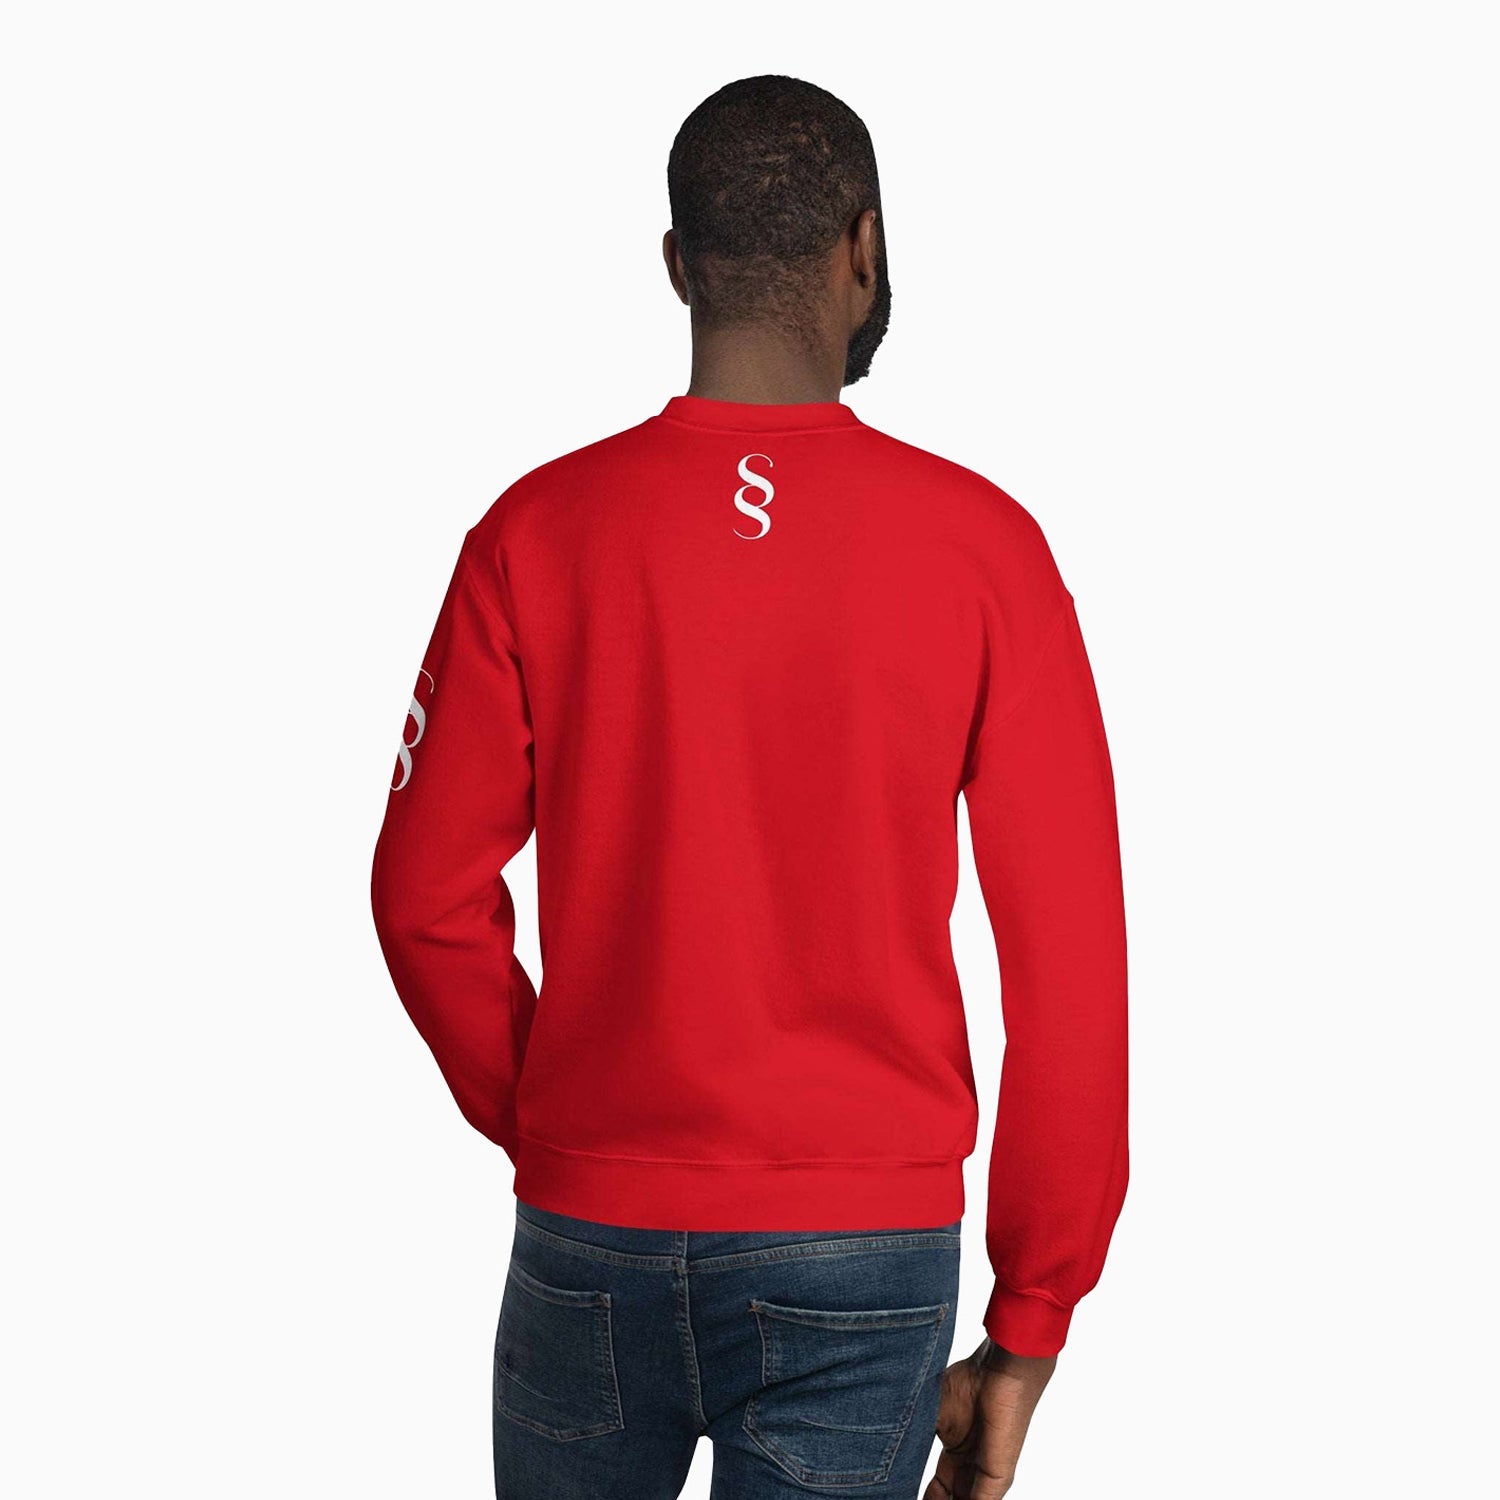 muhammad-ali-design-printed-crew-neck-red-sweatshirt-for-men-sc112-657